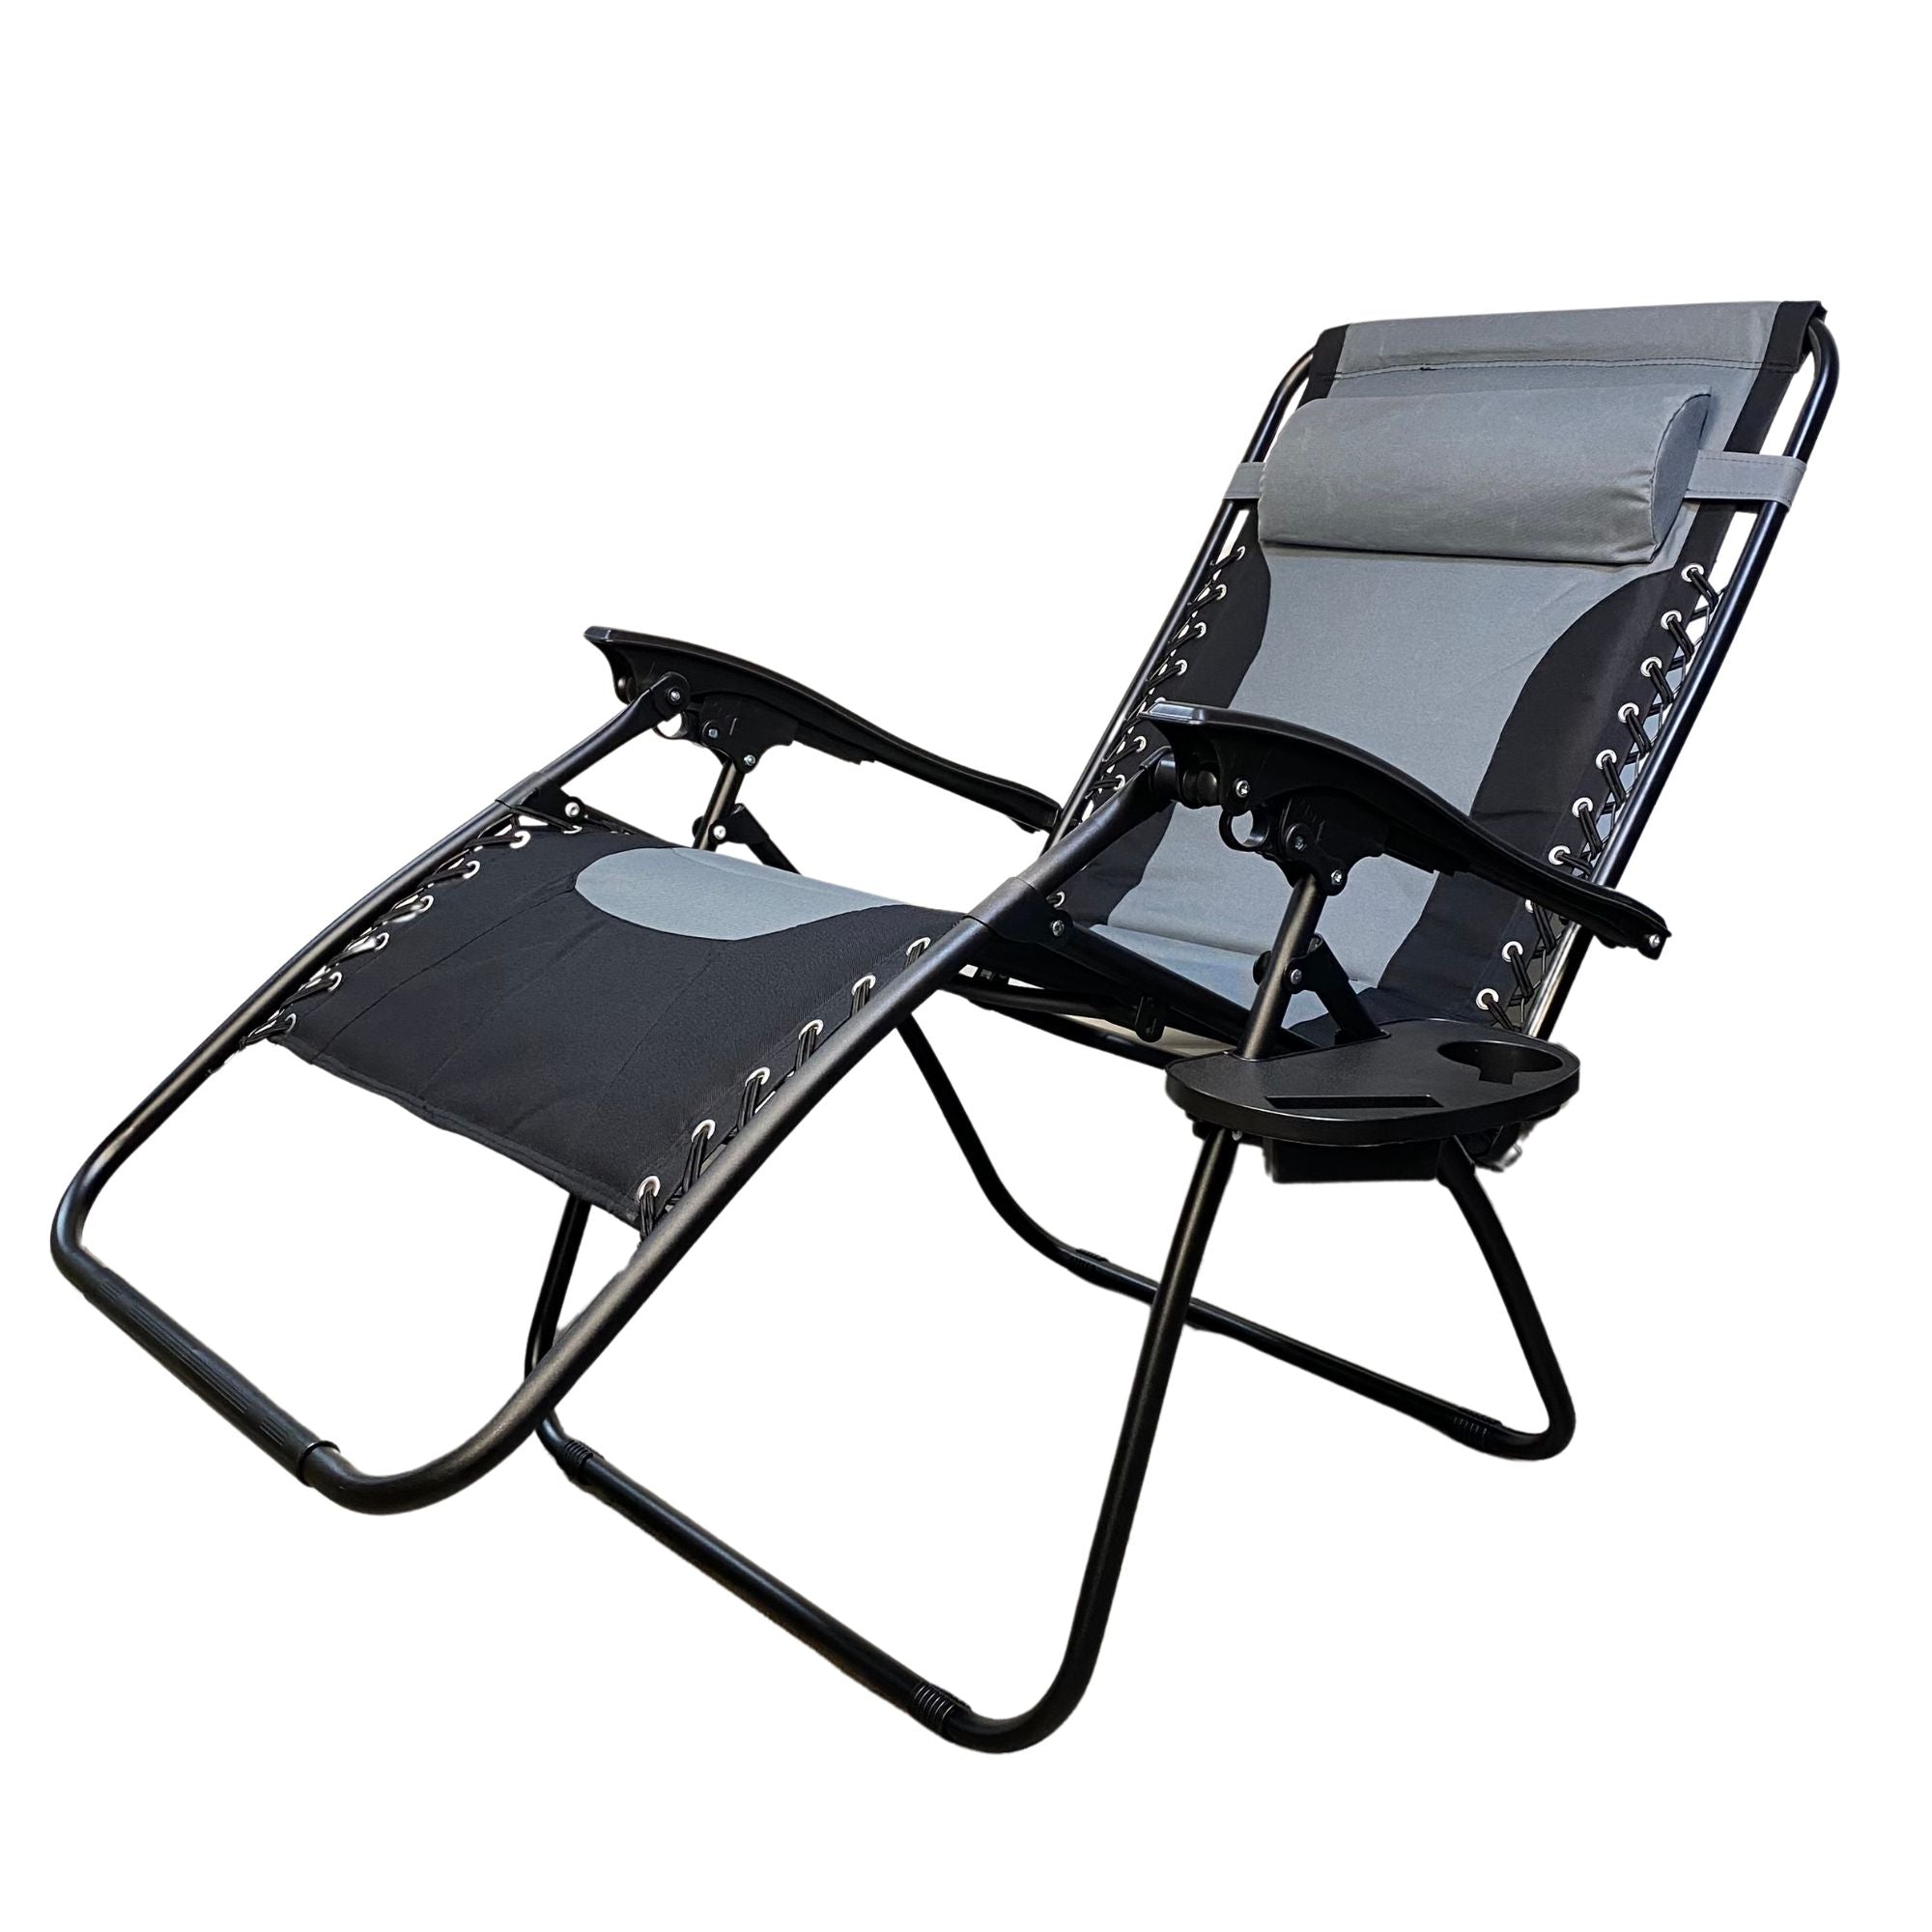 Luxury Padded Multi Position Zero Gravity Garden Relaxer Chair Lounger in Grey & Black